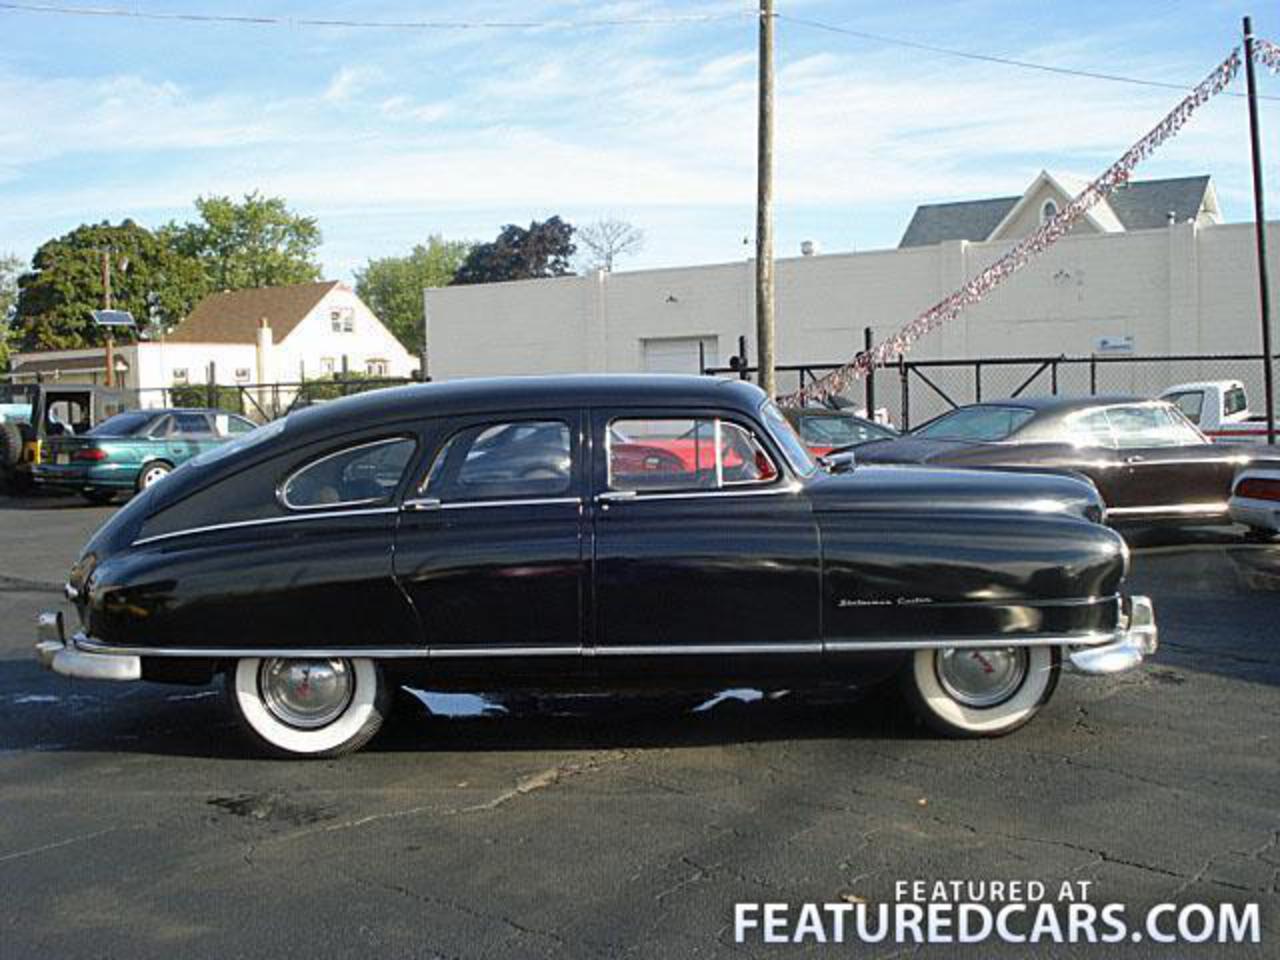 1950 Nash Statesman Custom - Riverside, NJ, Used Cars for Sale ...